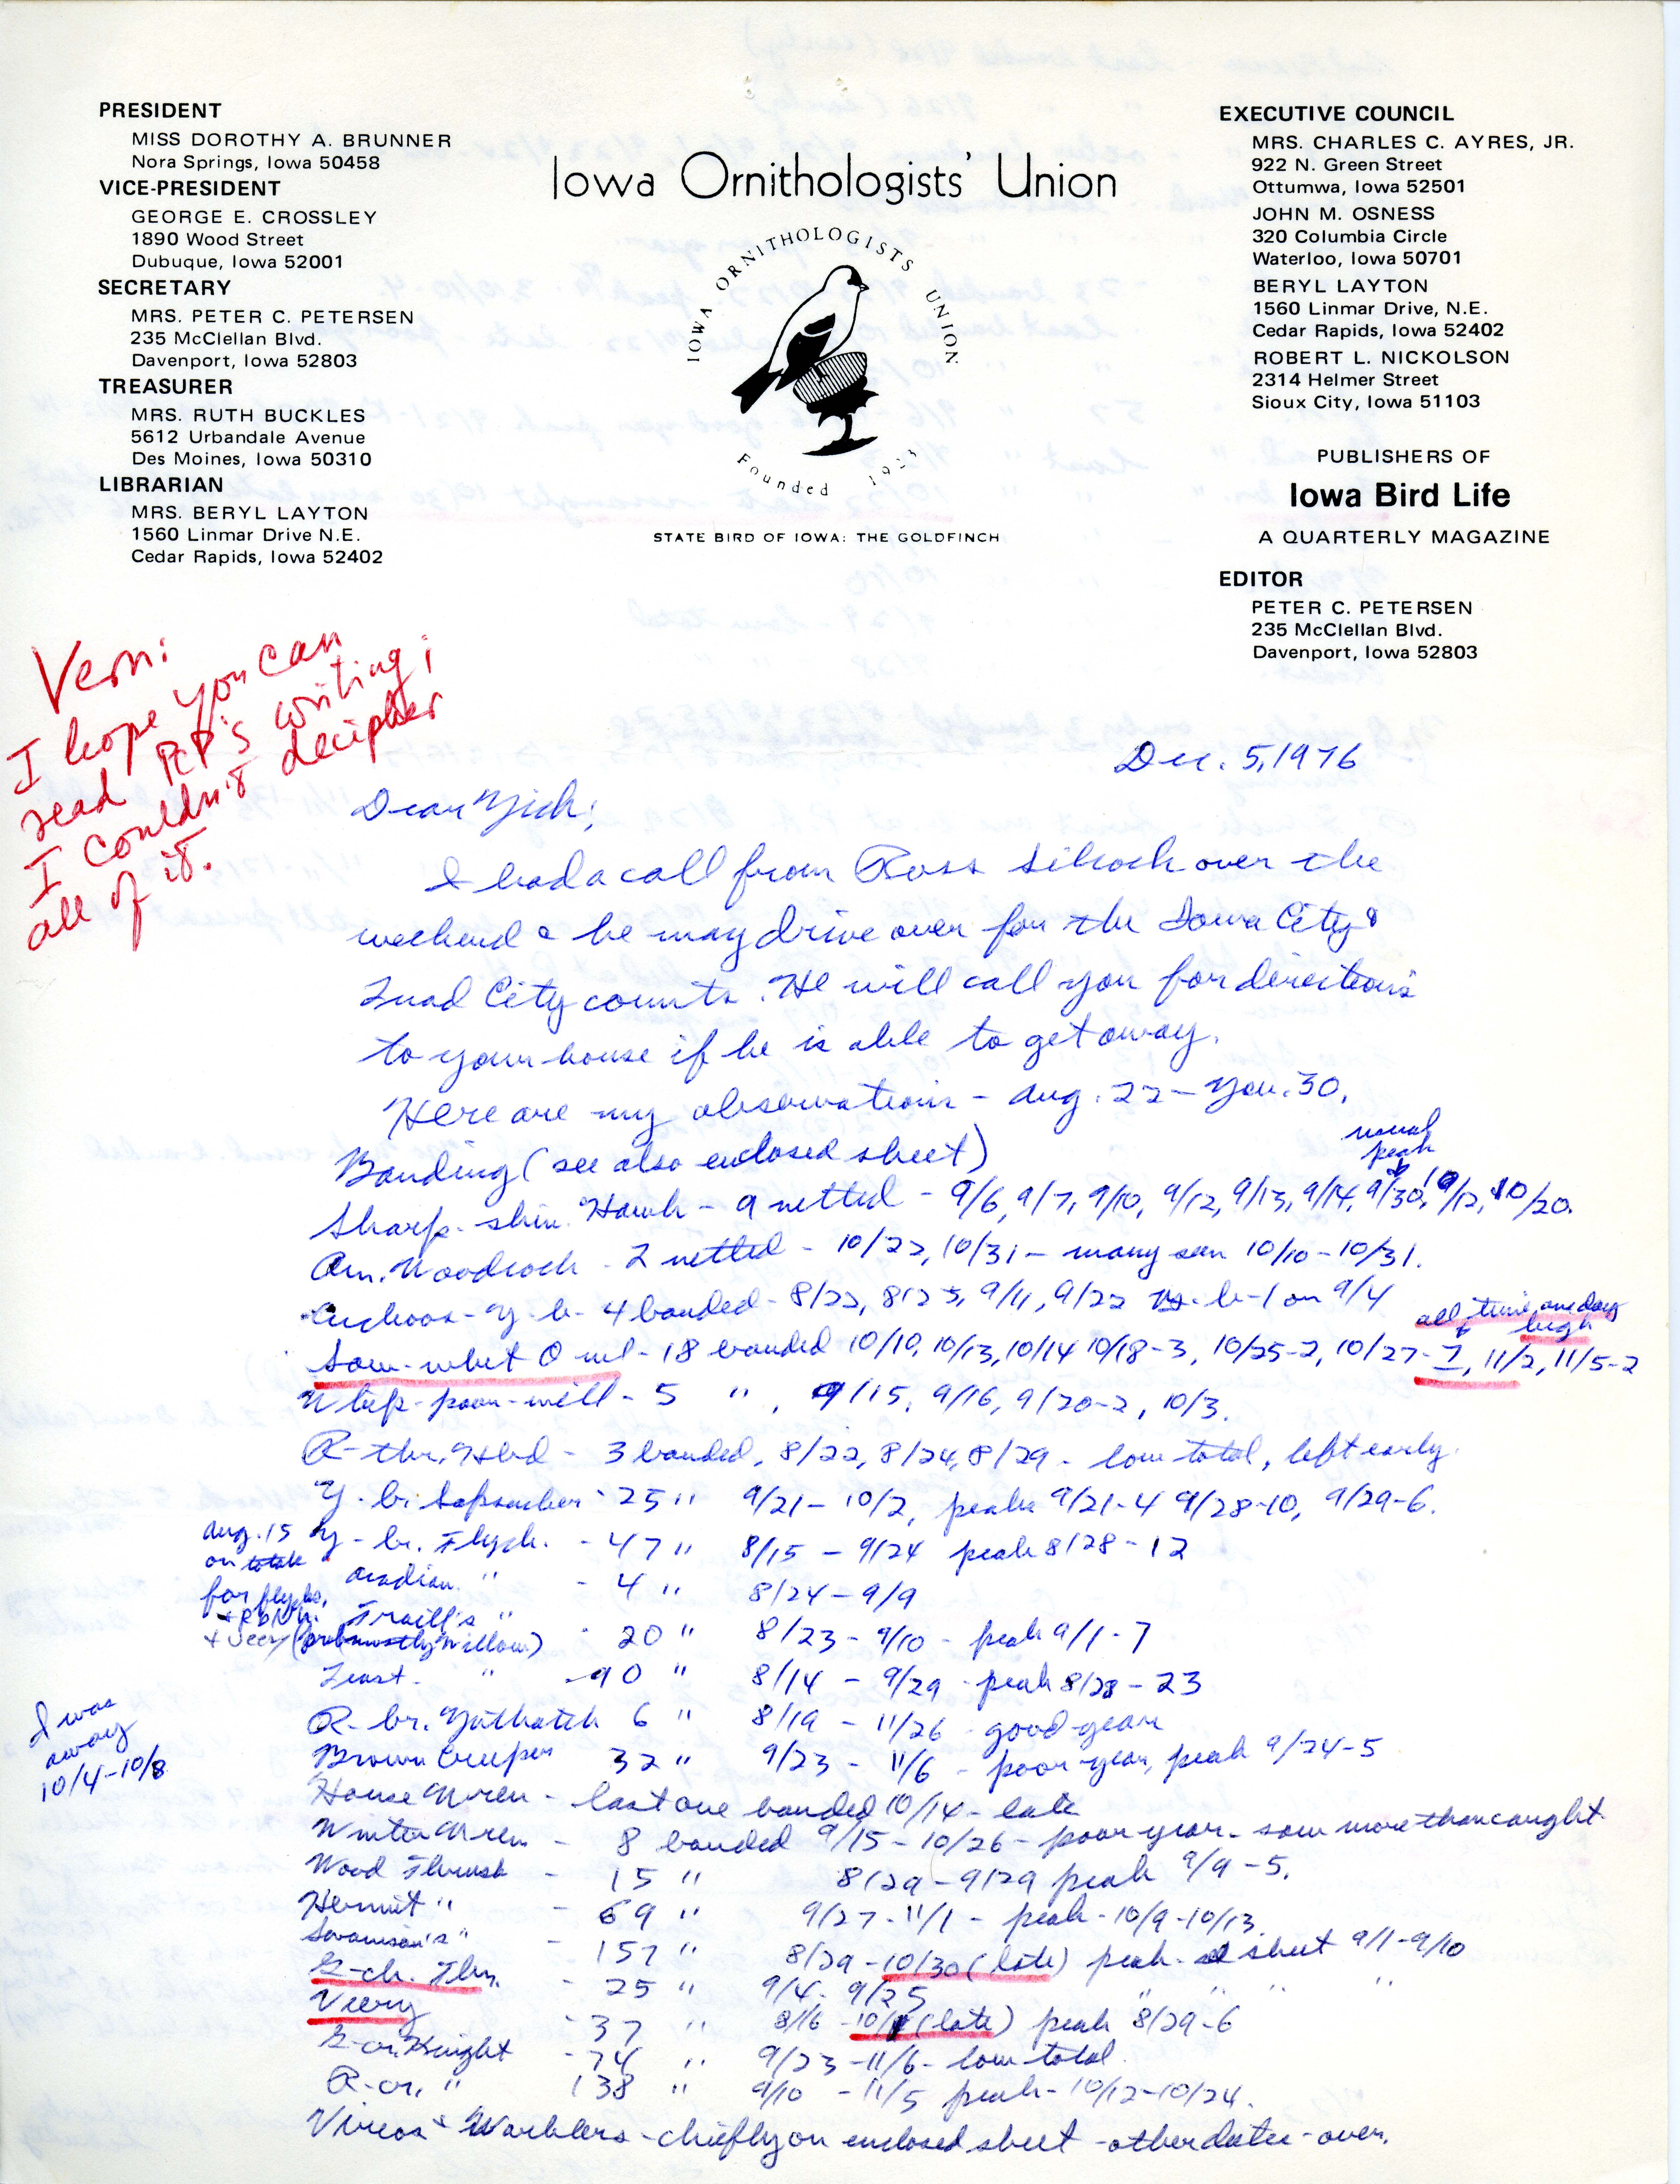 Peter C. Petersen letter and checklist to Nicholas S. Halmi regarding fall migration, 1976